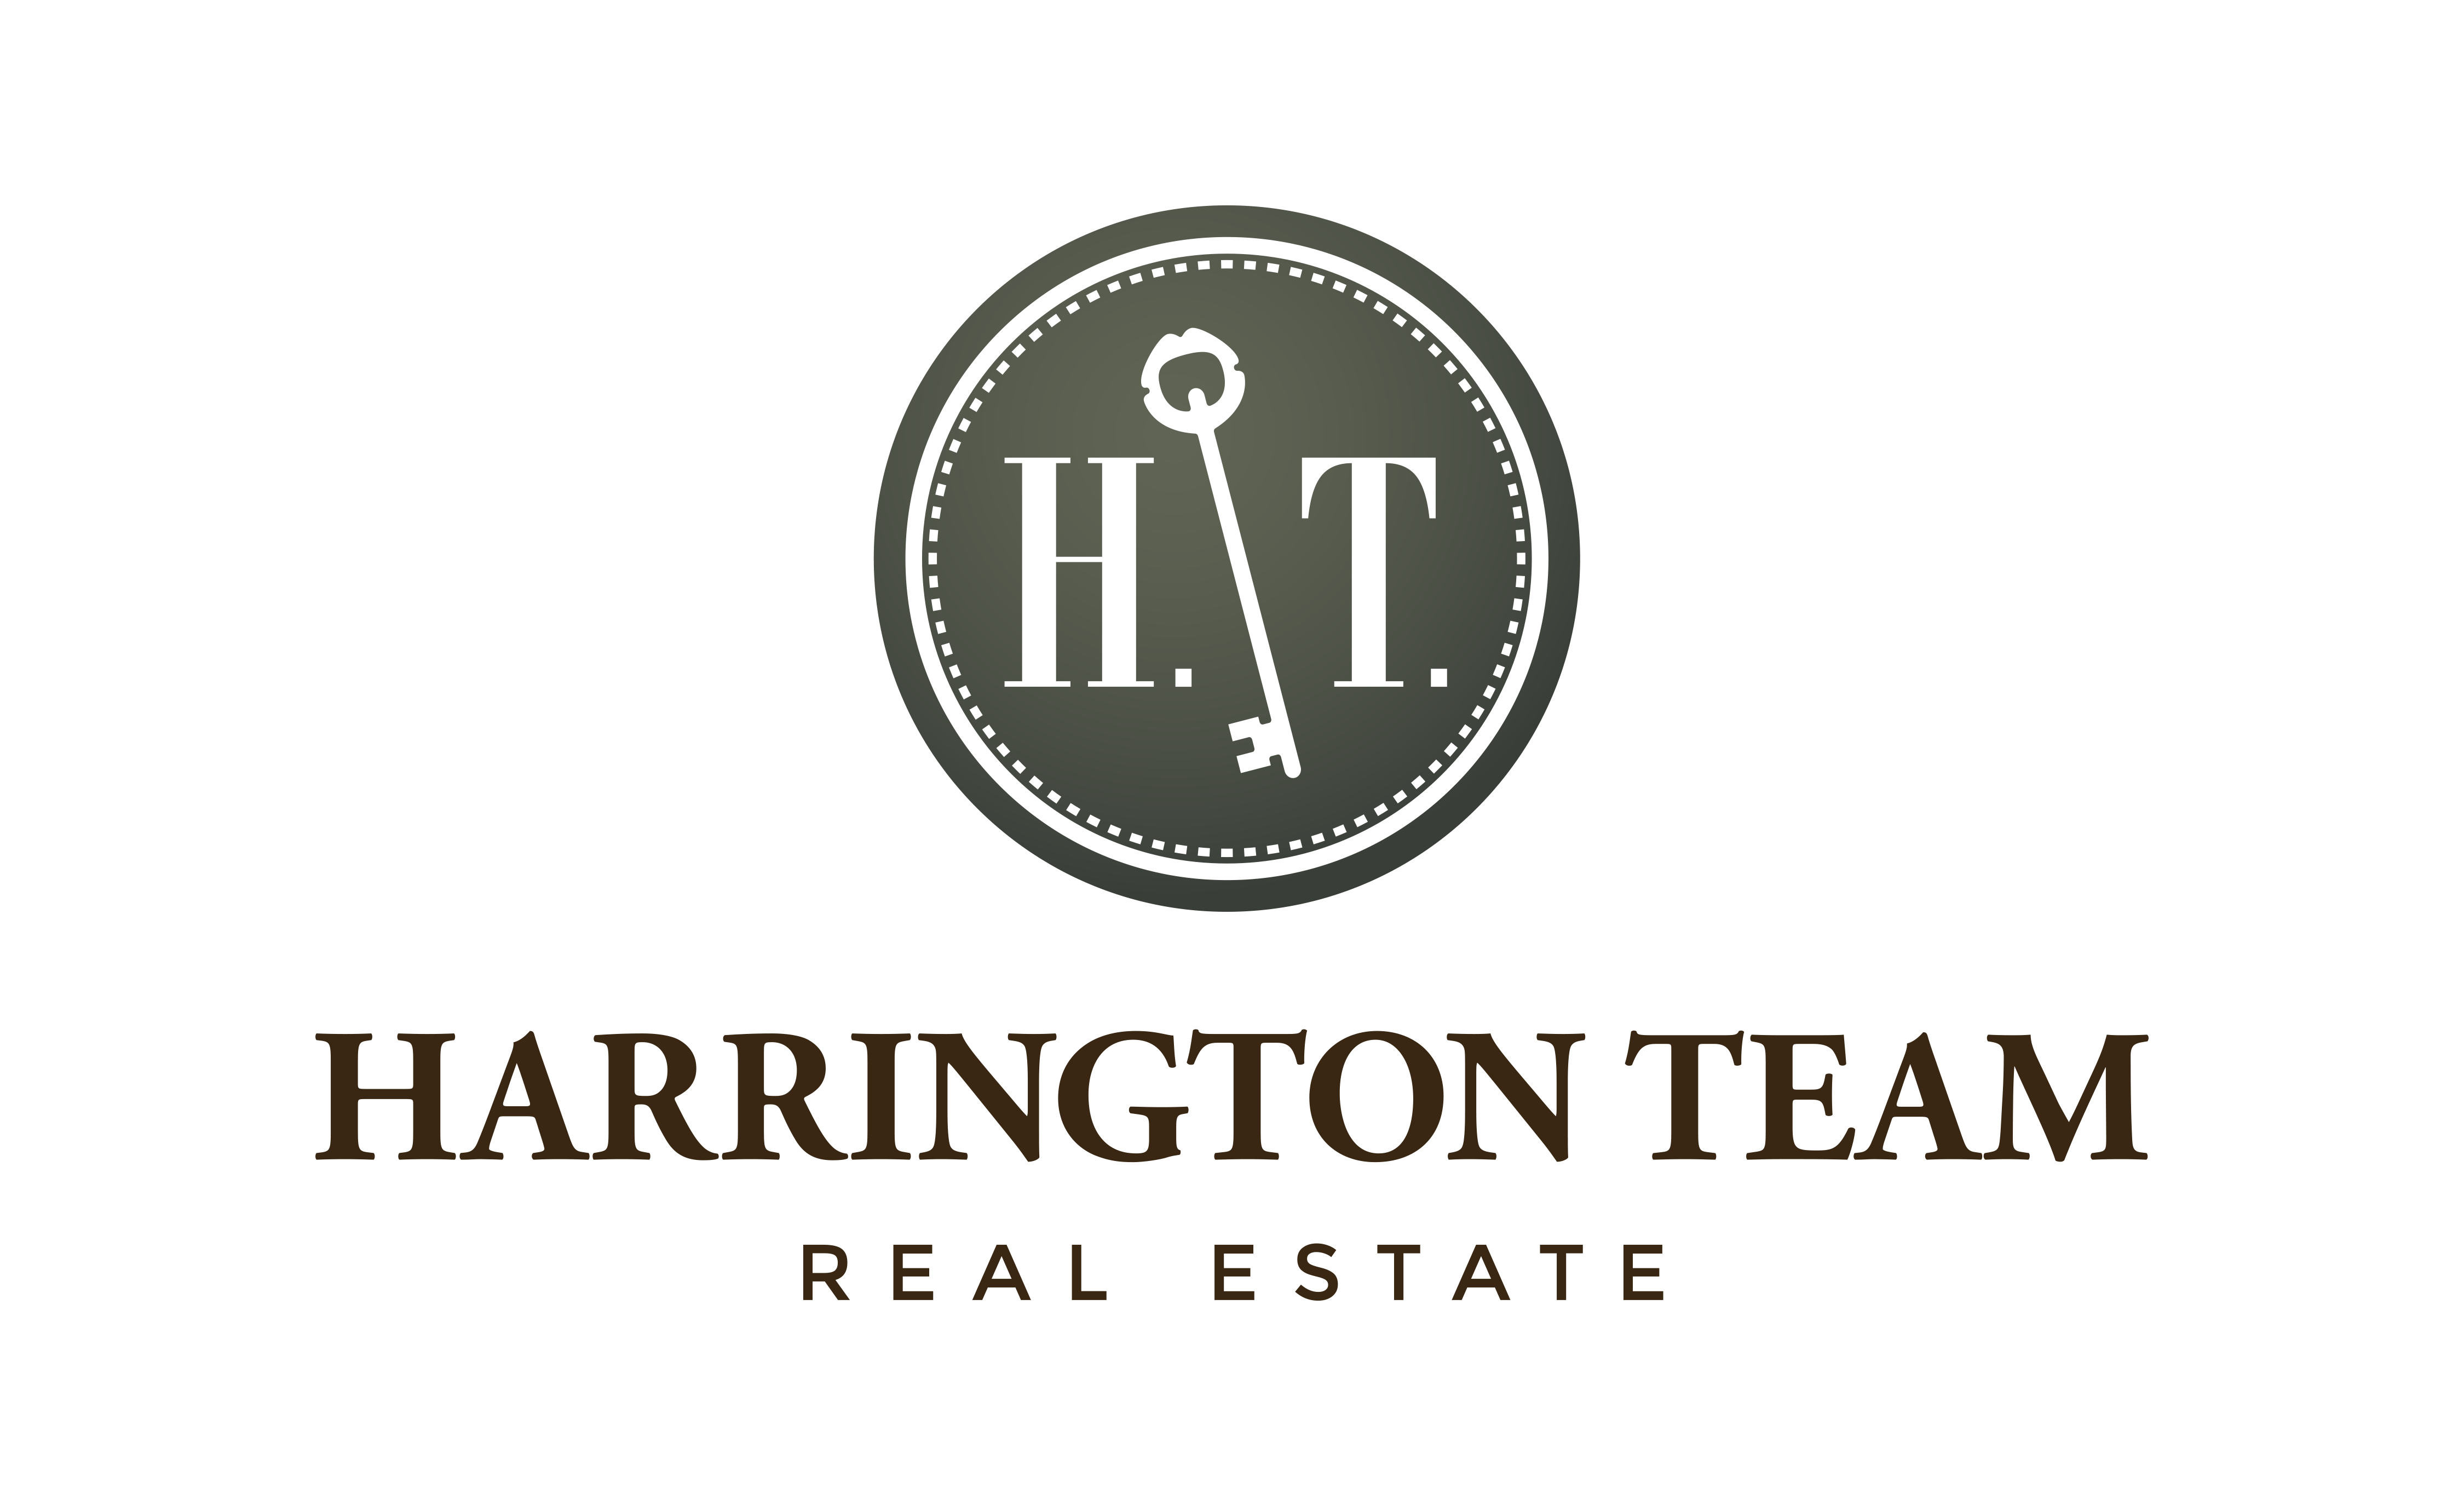 Real Estate Team Logo - The Harrington Team